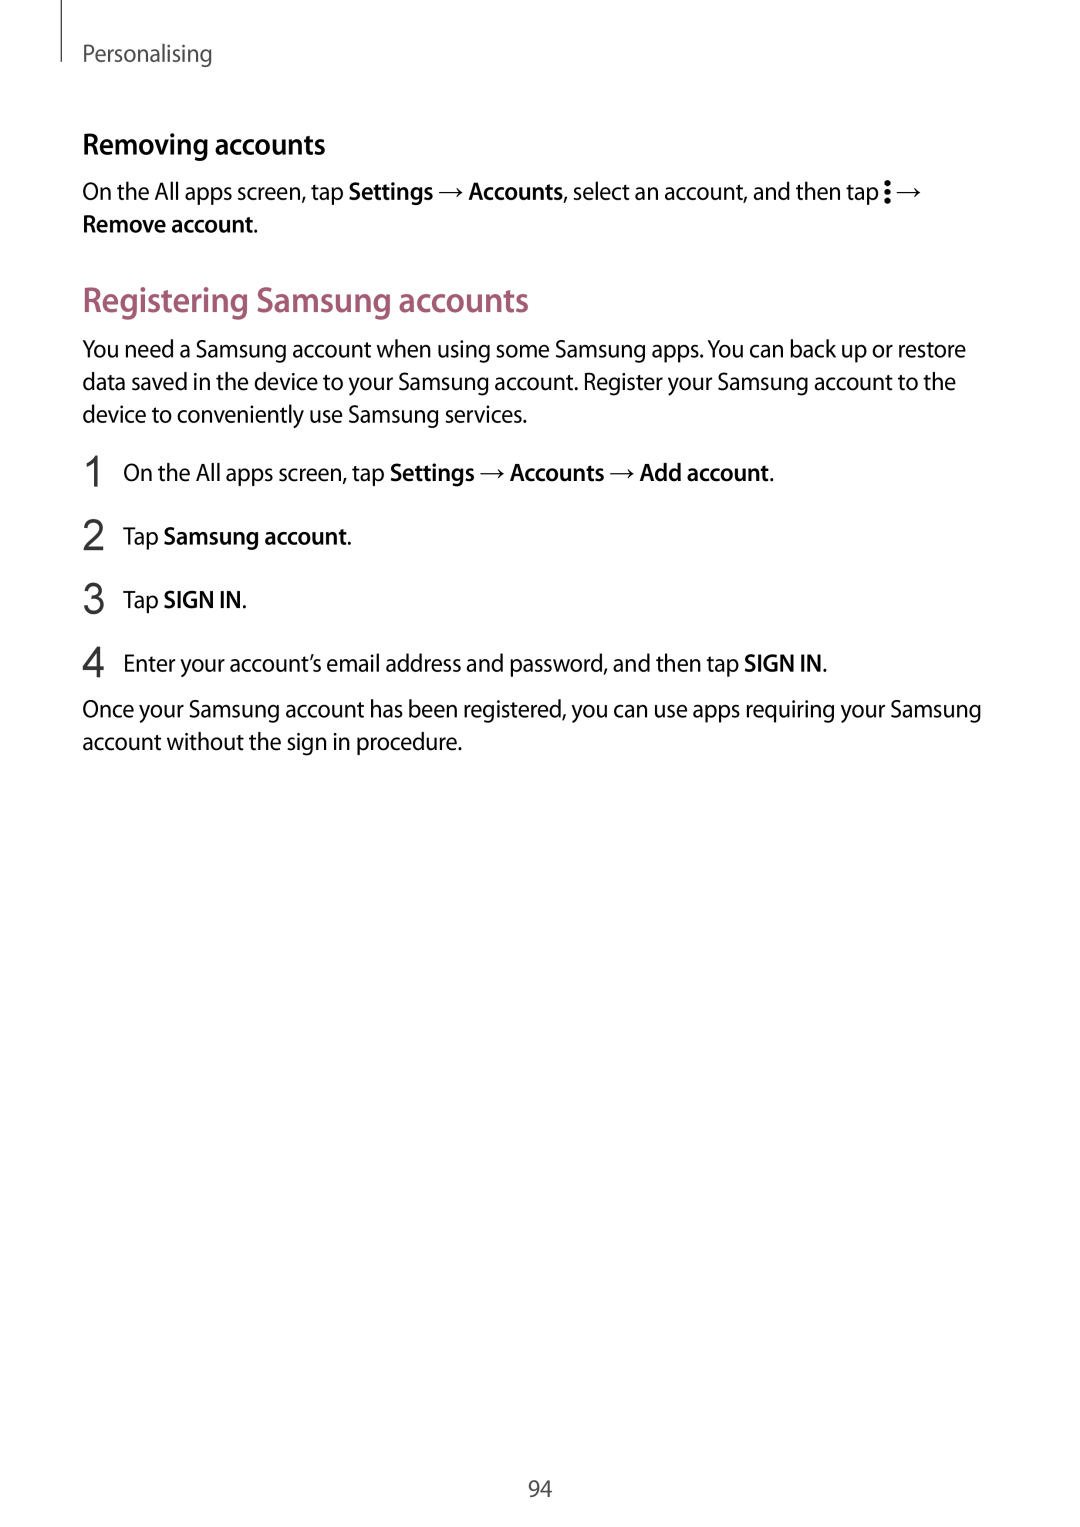 Samsung SM-N915FZKYATO Registering Samsung accounts, Removing accounts, Tap Samsung account Tap SIGN IN, Personalising 